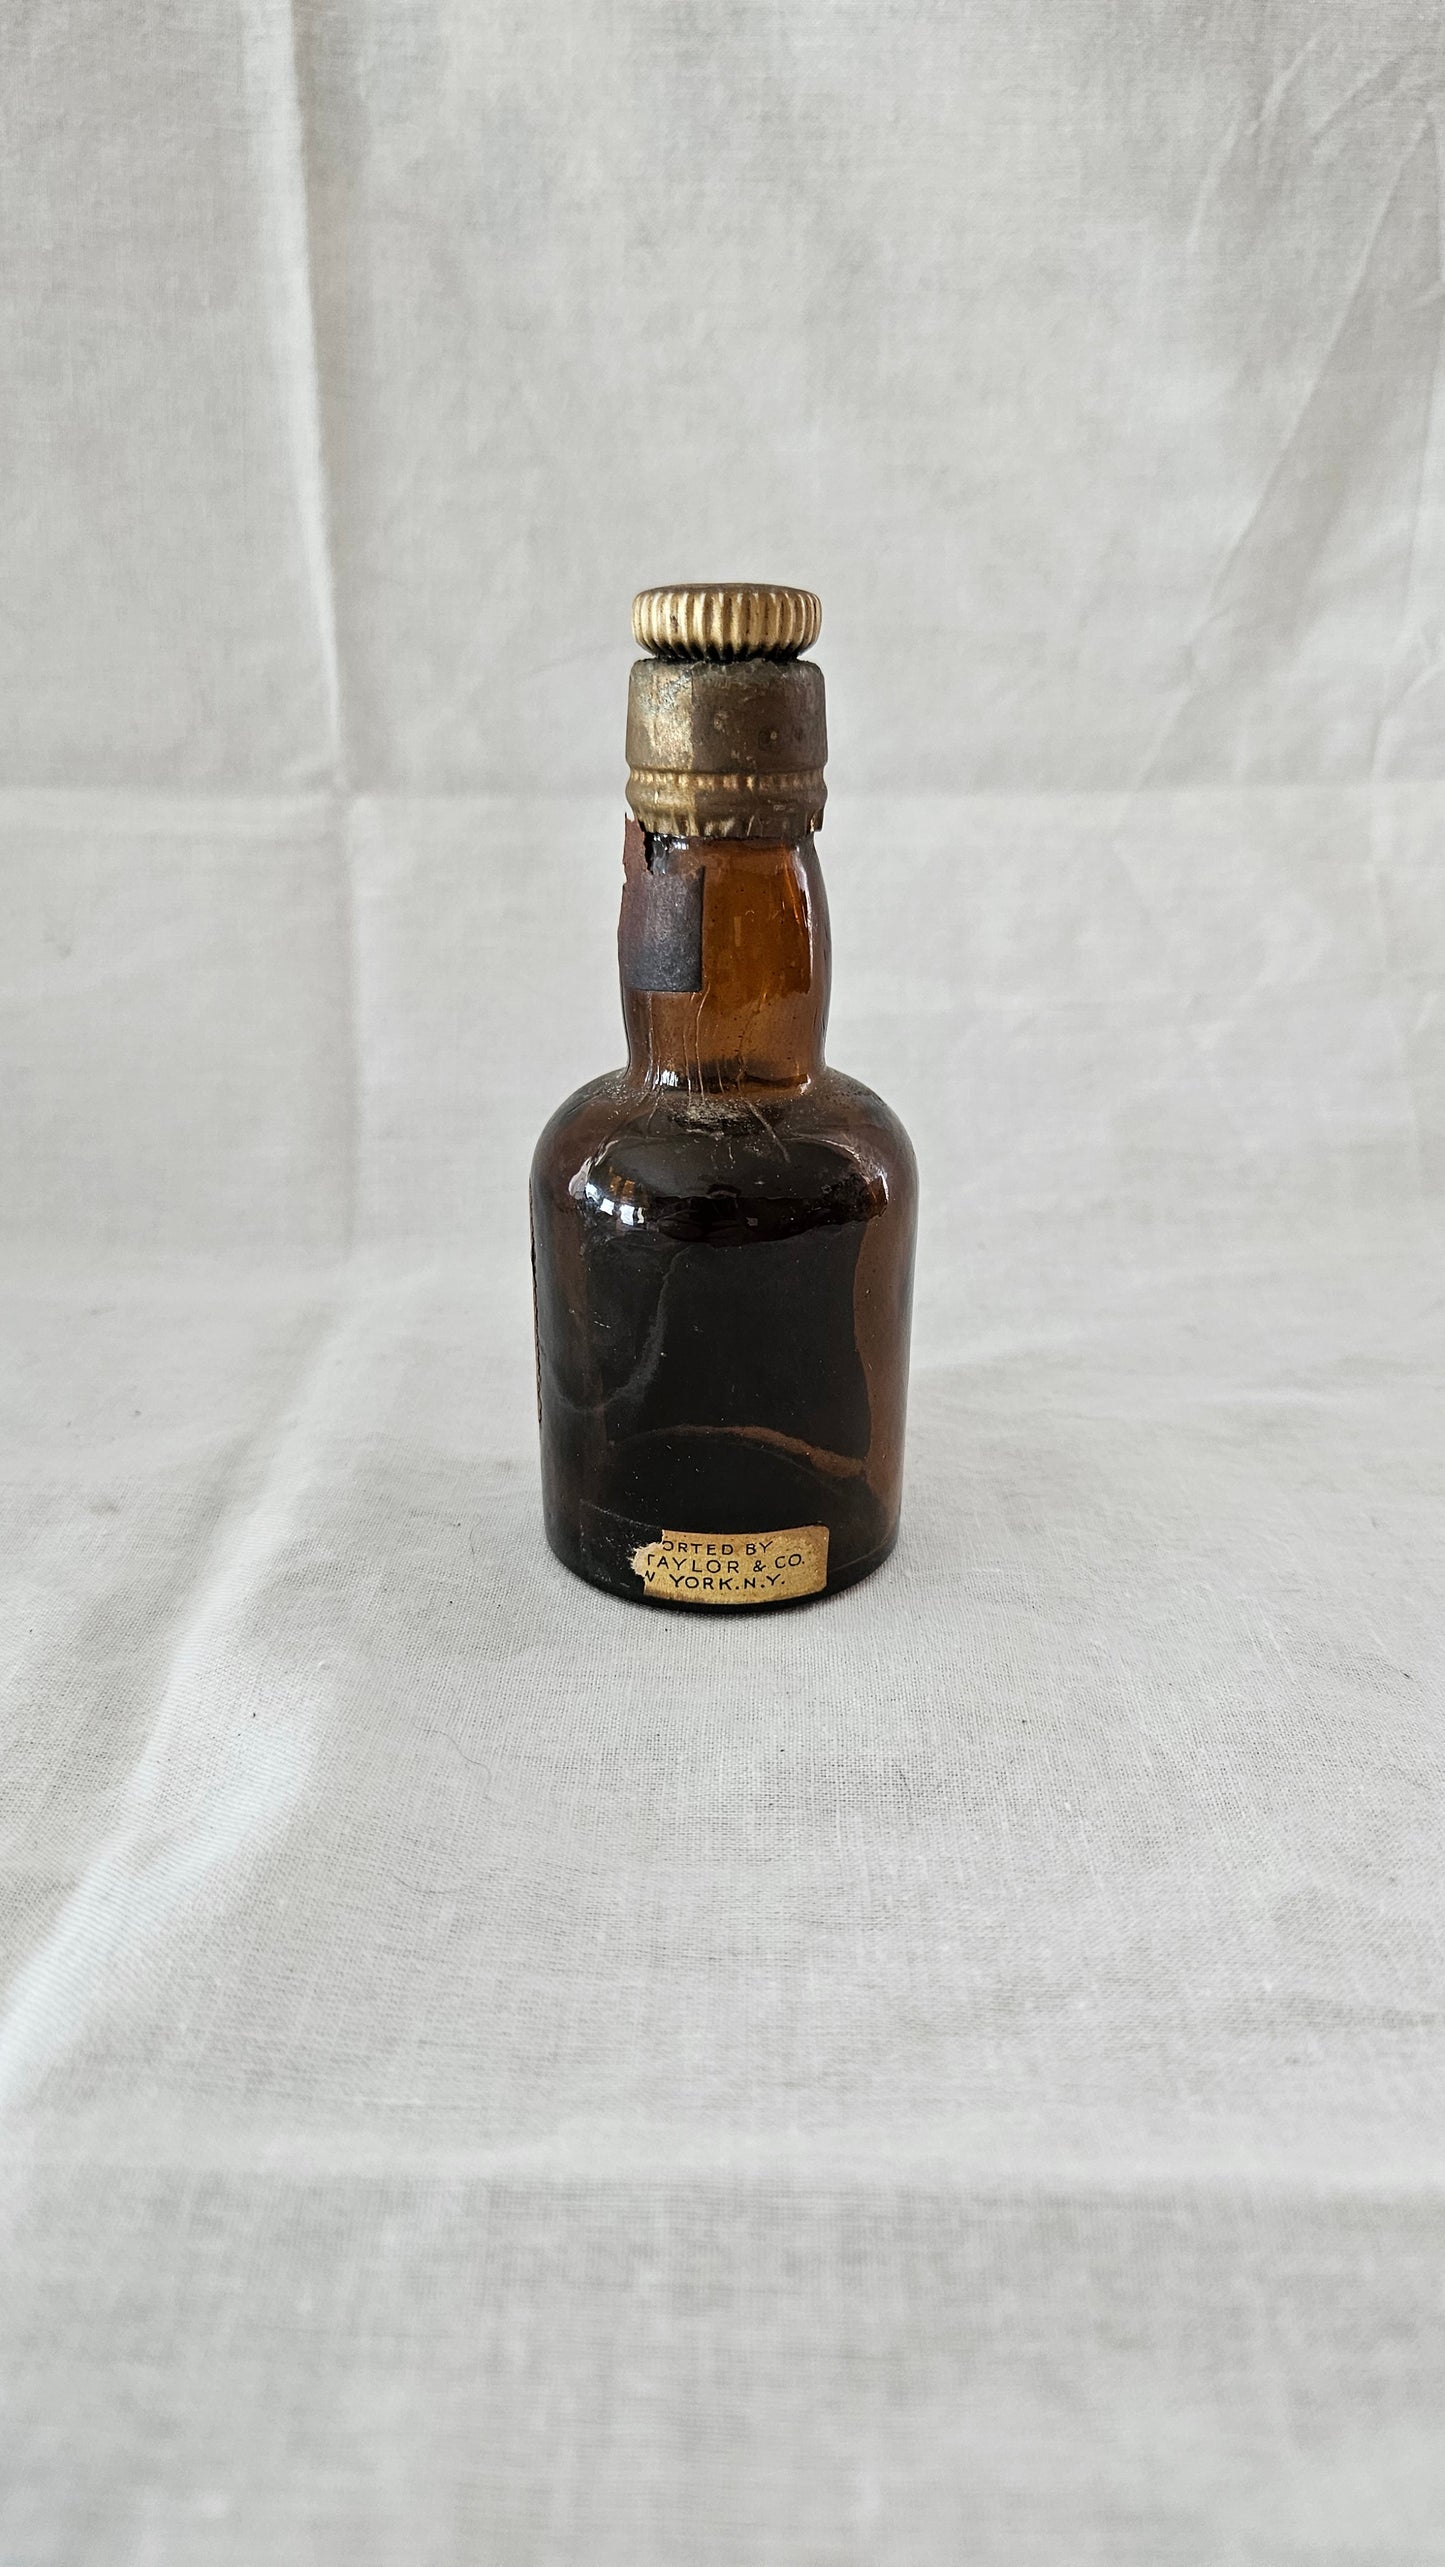 Vintage Gaelic Old Smuggler Brand Scotch Whiskey Bottle